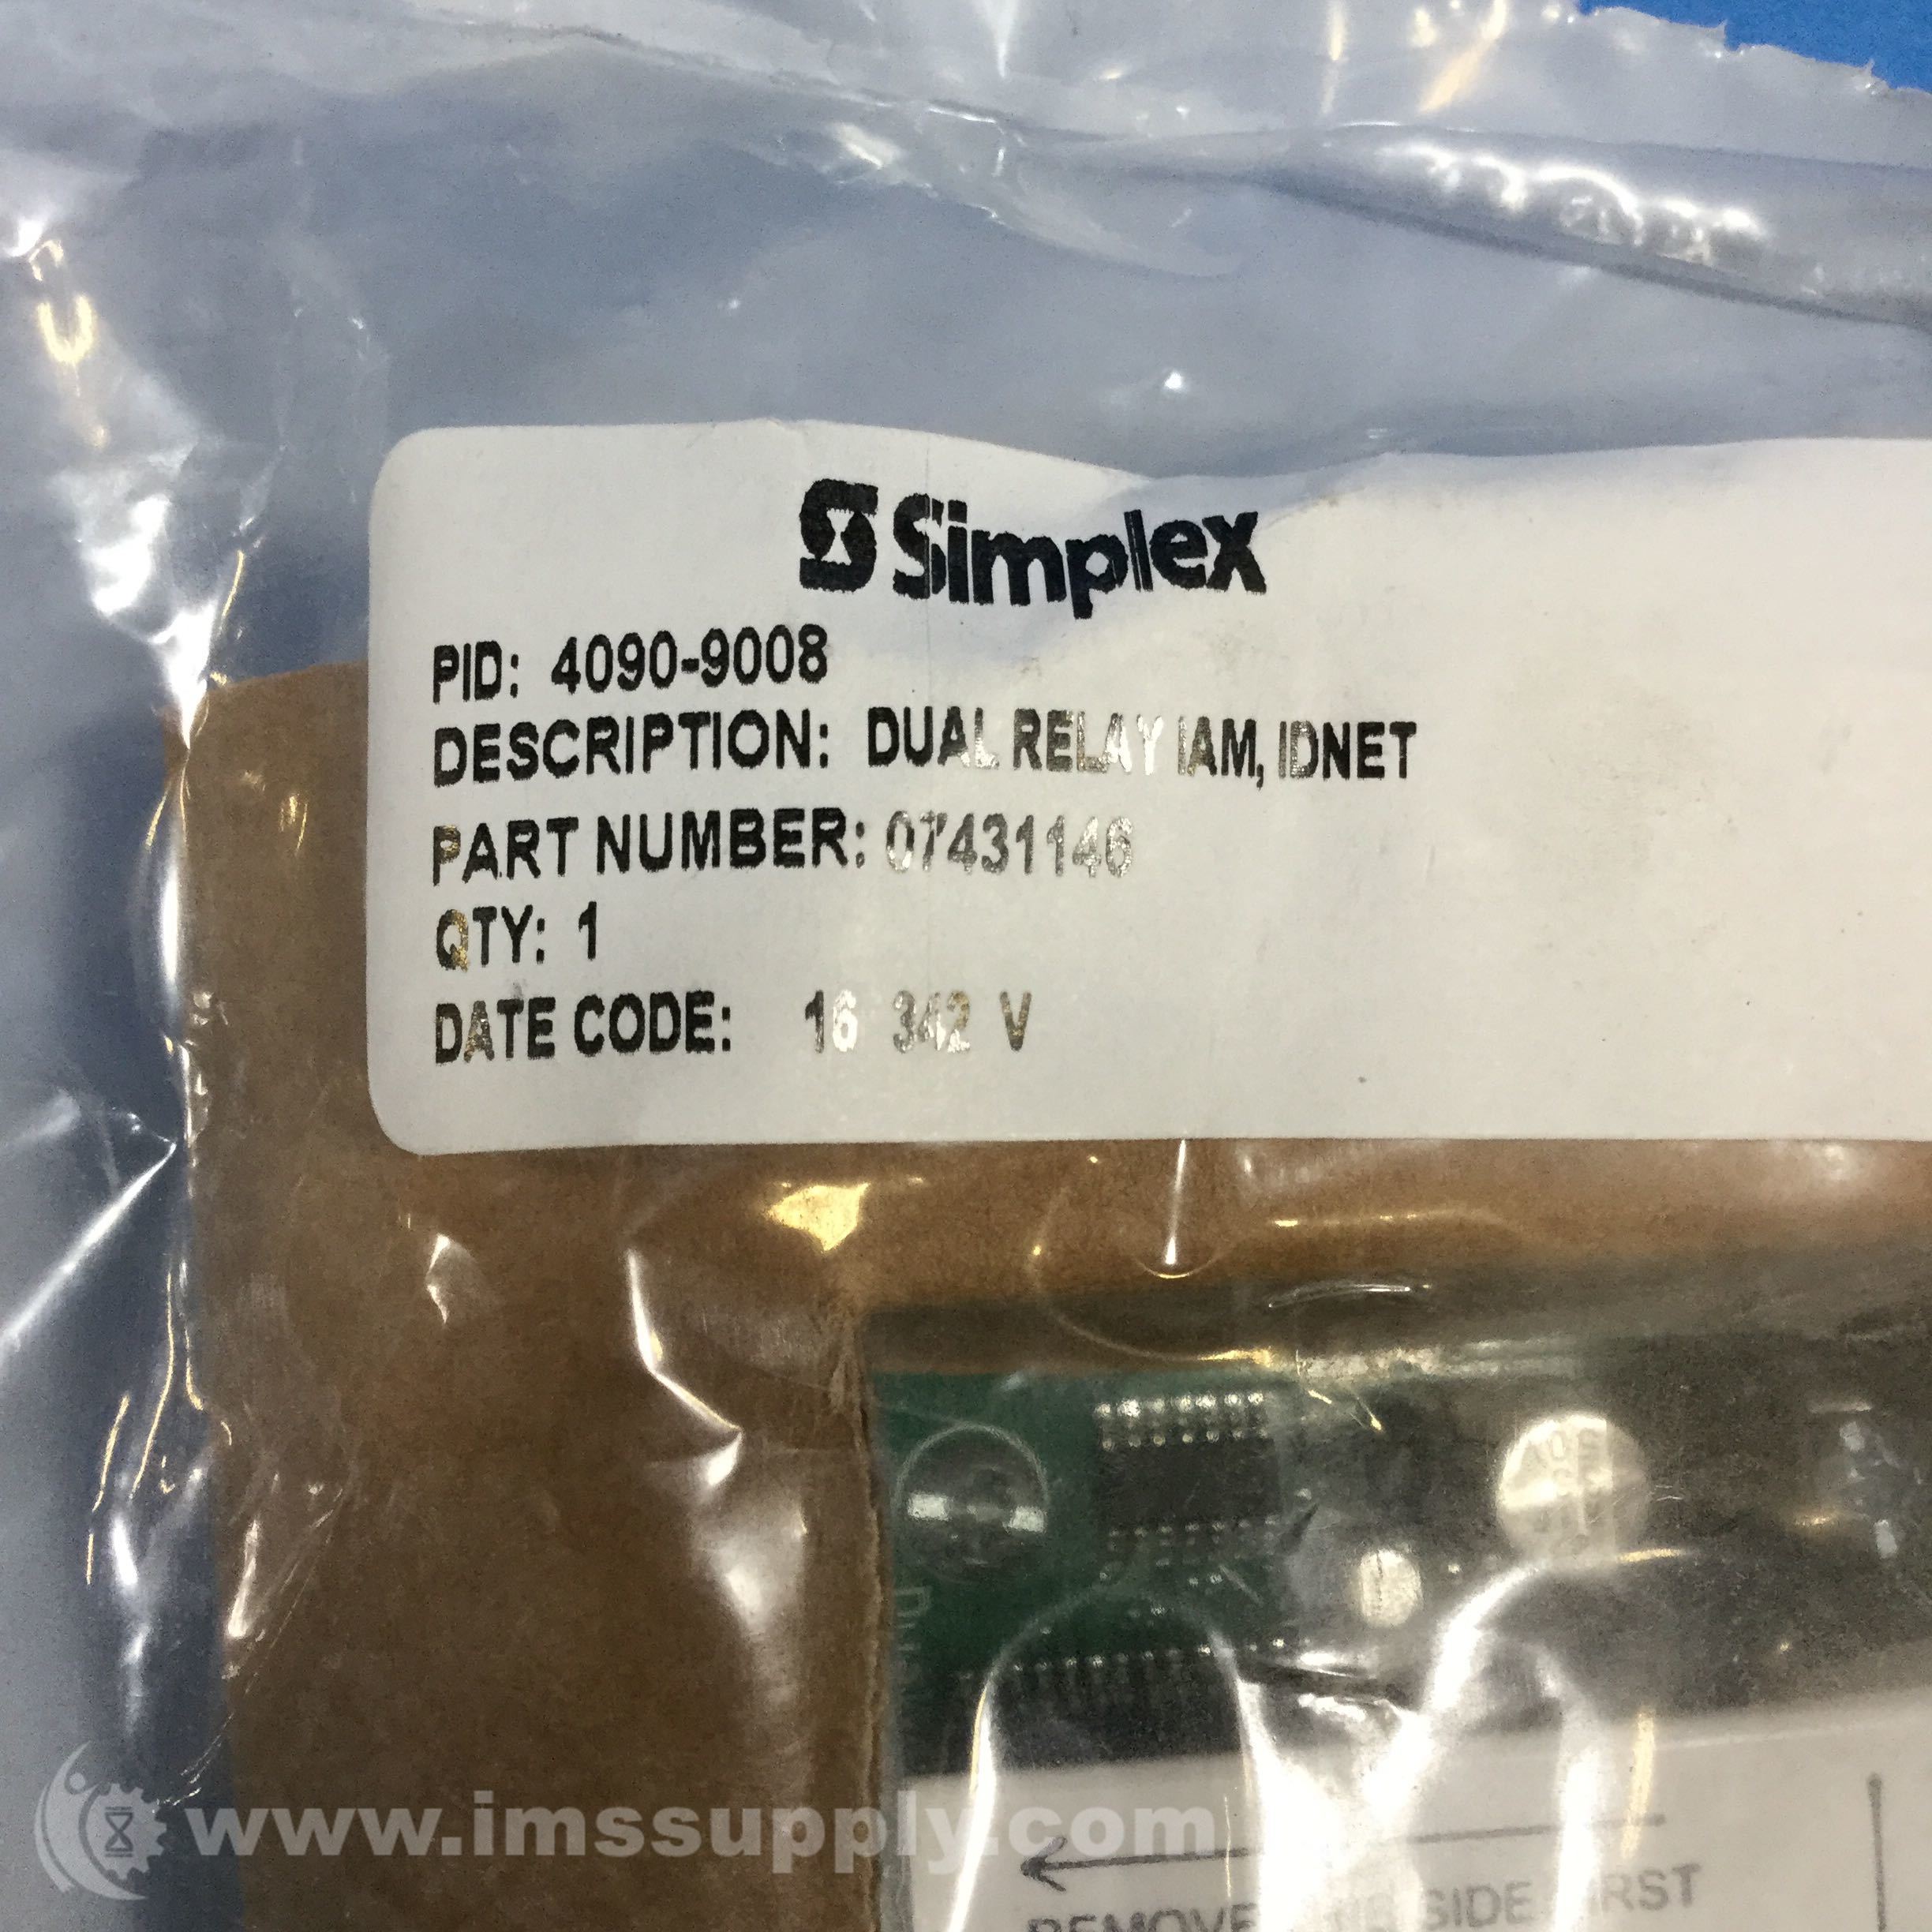 Simplex Dual Relay IAM IDNET Fire Alarm #4090-9008 